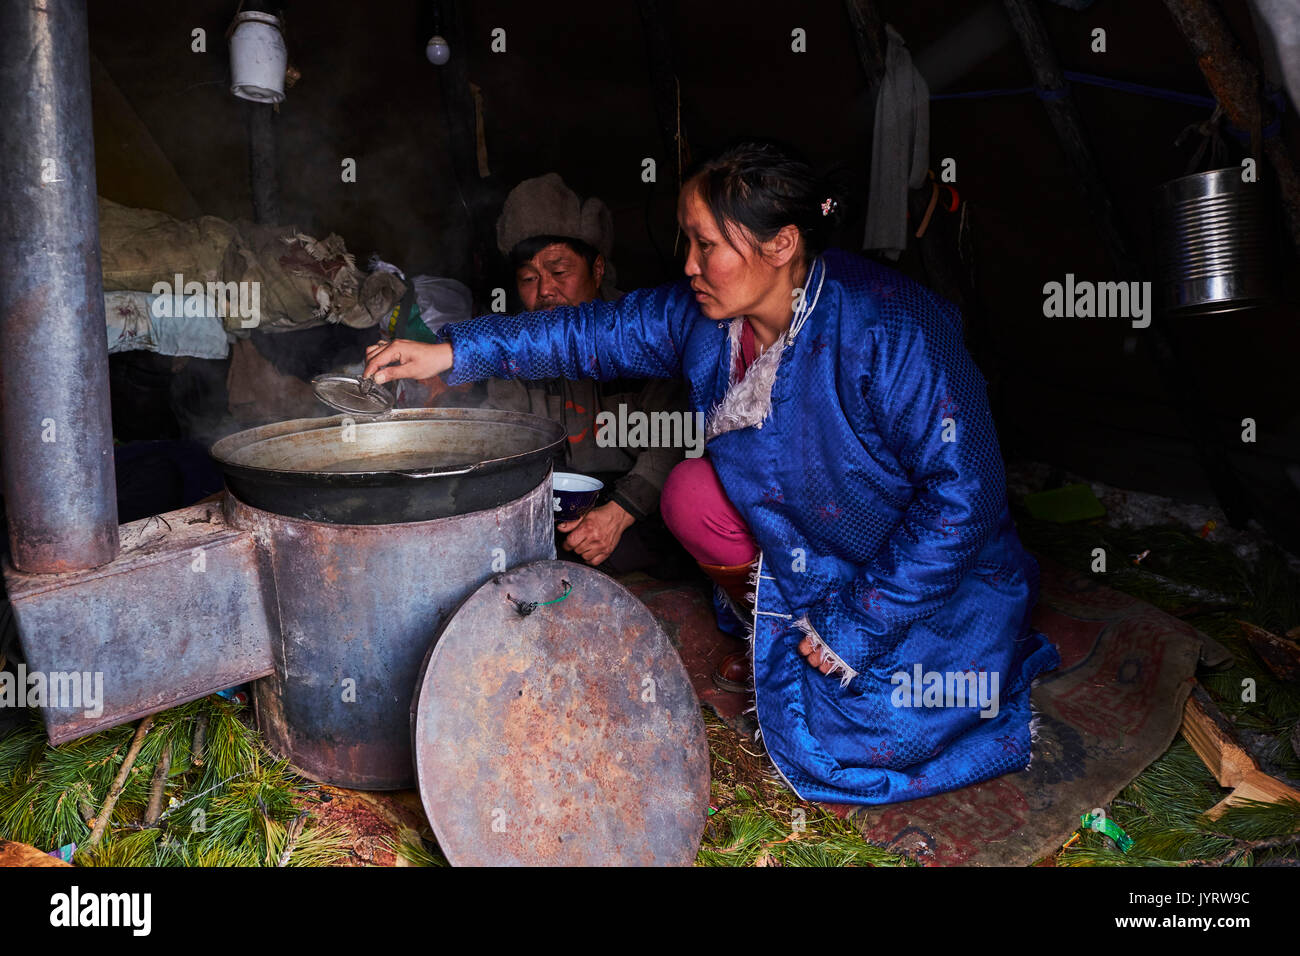 Mongolia, Khovsgol province, the Tsaatan, reindeer herder, the winter camp, cooking reindeer meat Stock Photo